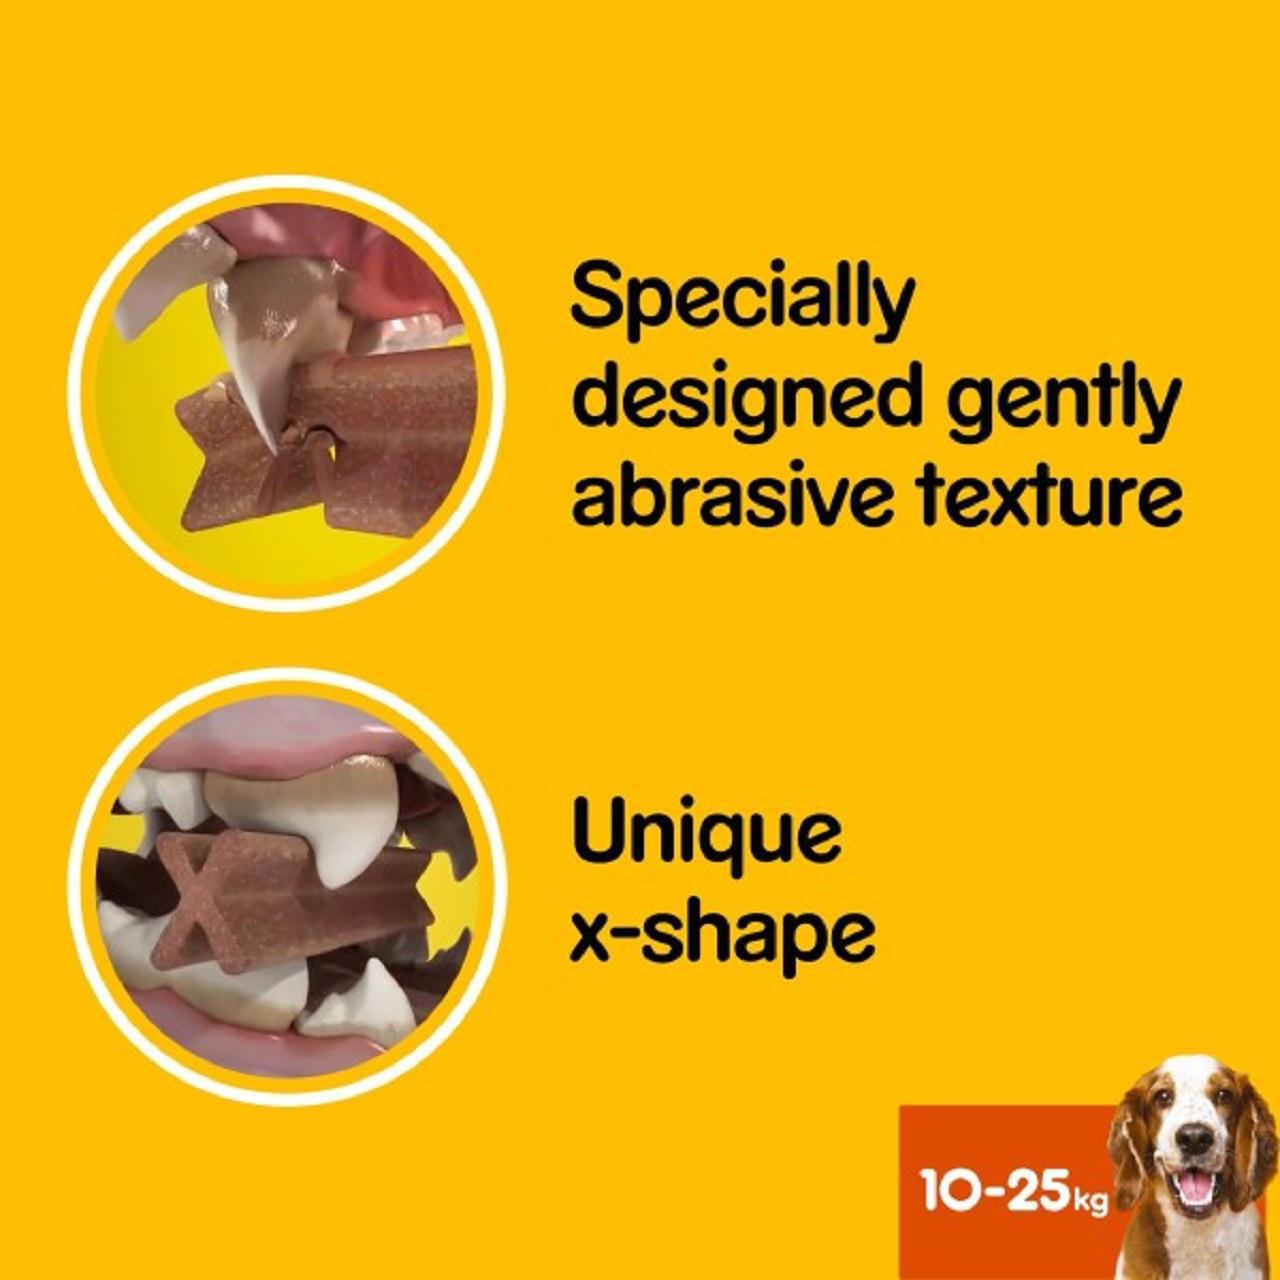 Pedigree Dentastix Fresh Adult Medium Dog Treats Dental Sticks 28 x 26g